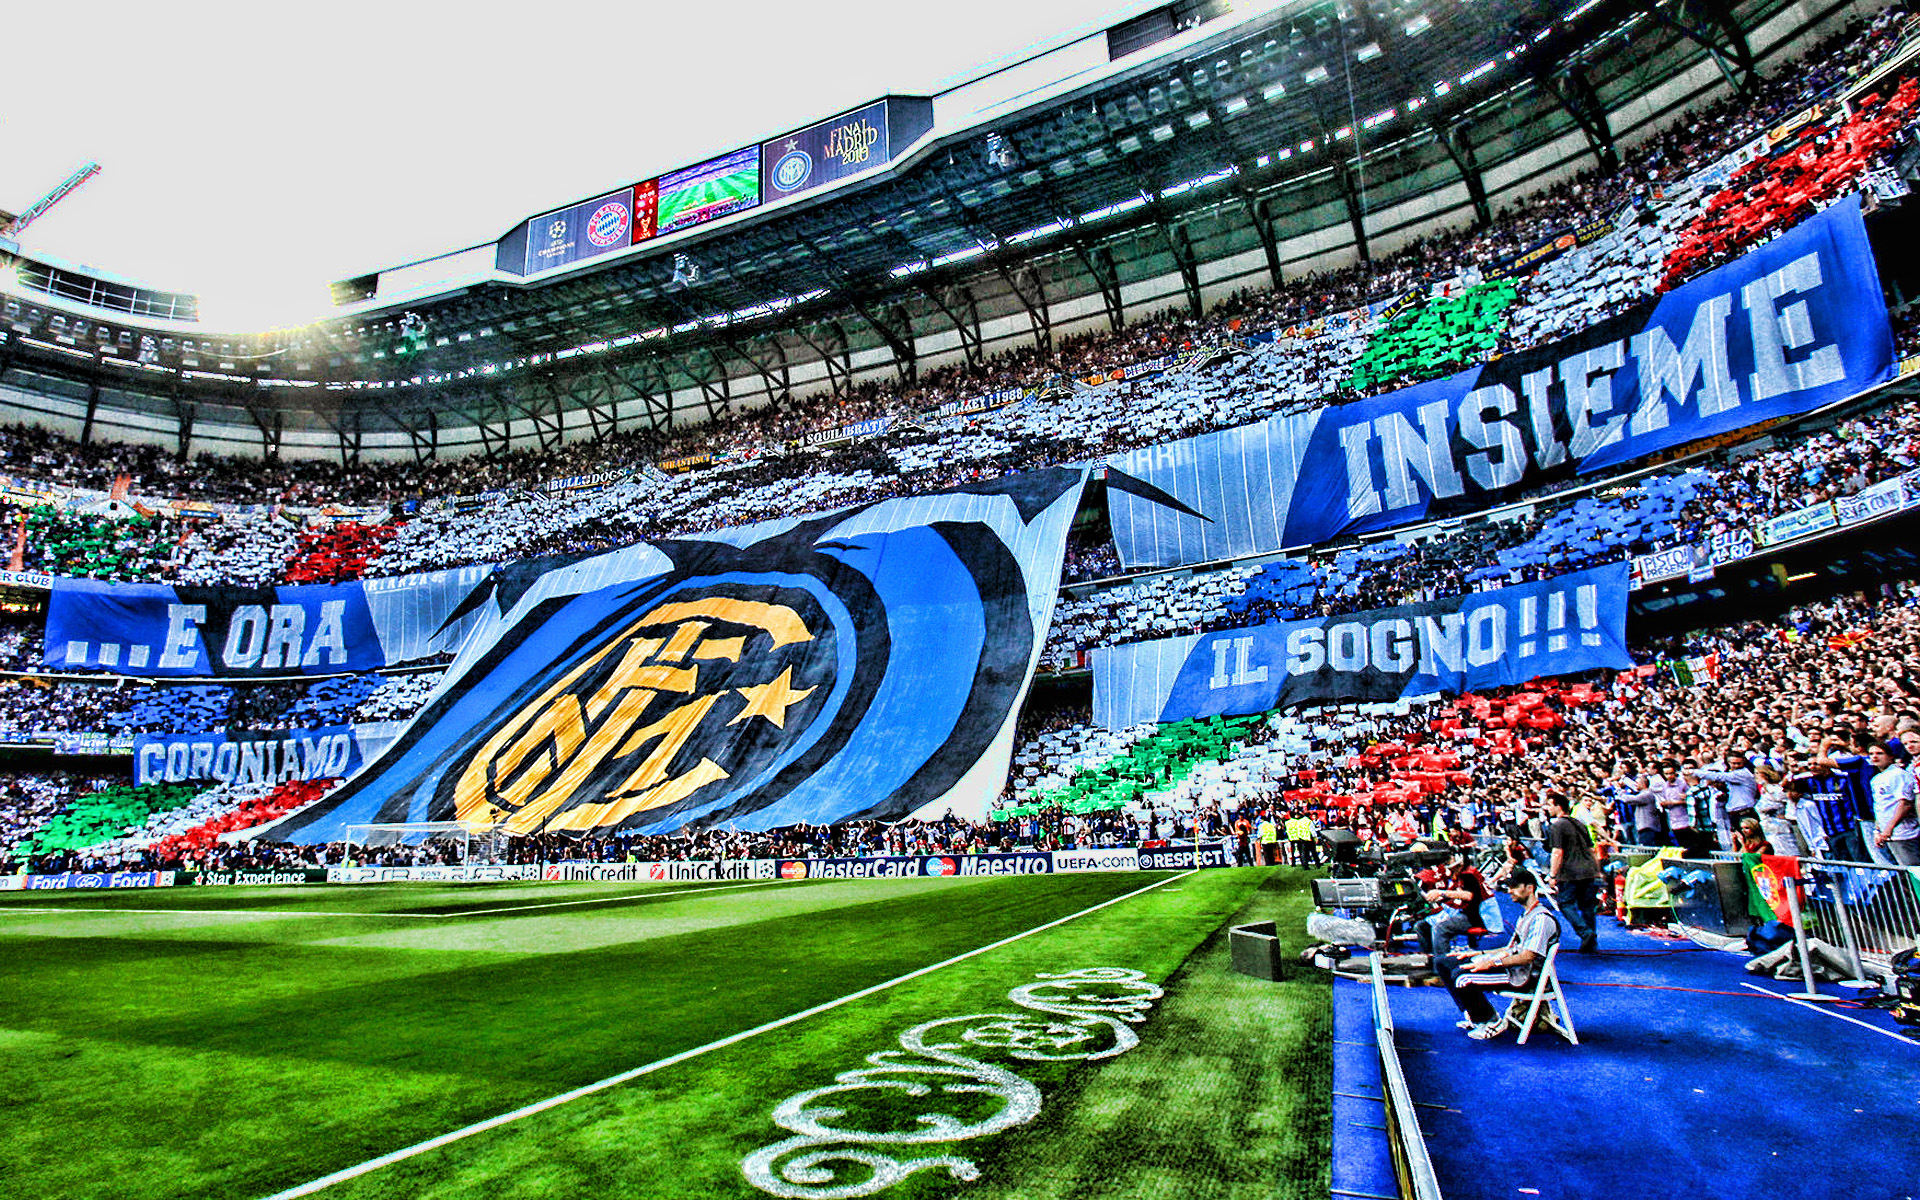 Download wallpaper Internazionale stadium, HDR, Giuseppe Meazza